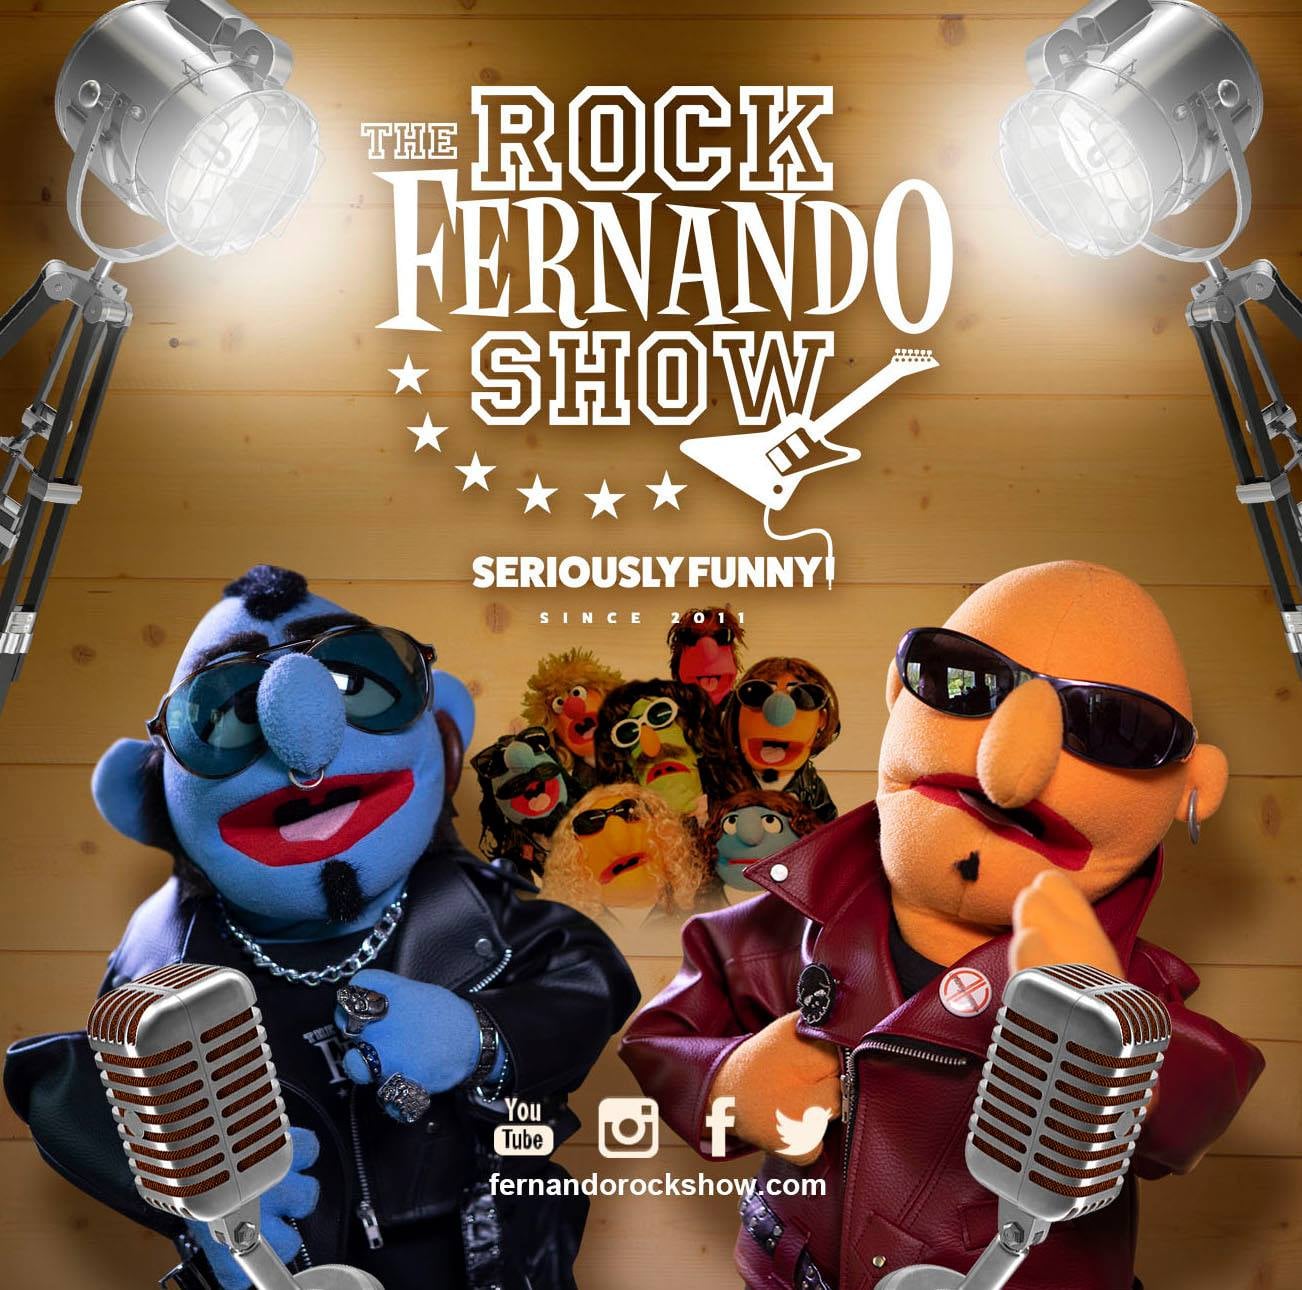 Fernando-rock-show-Markus and Spenser